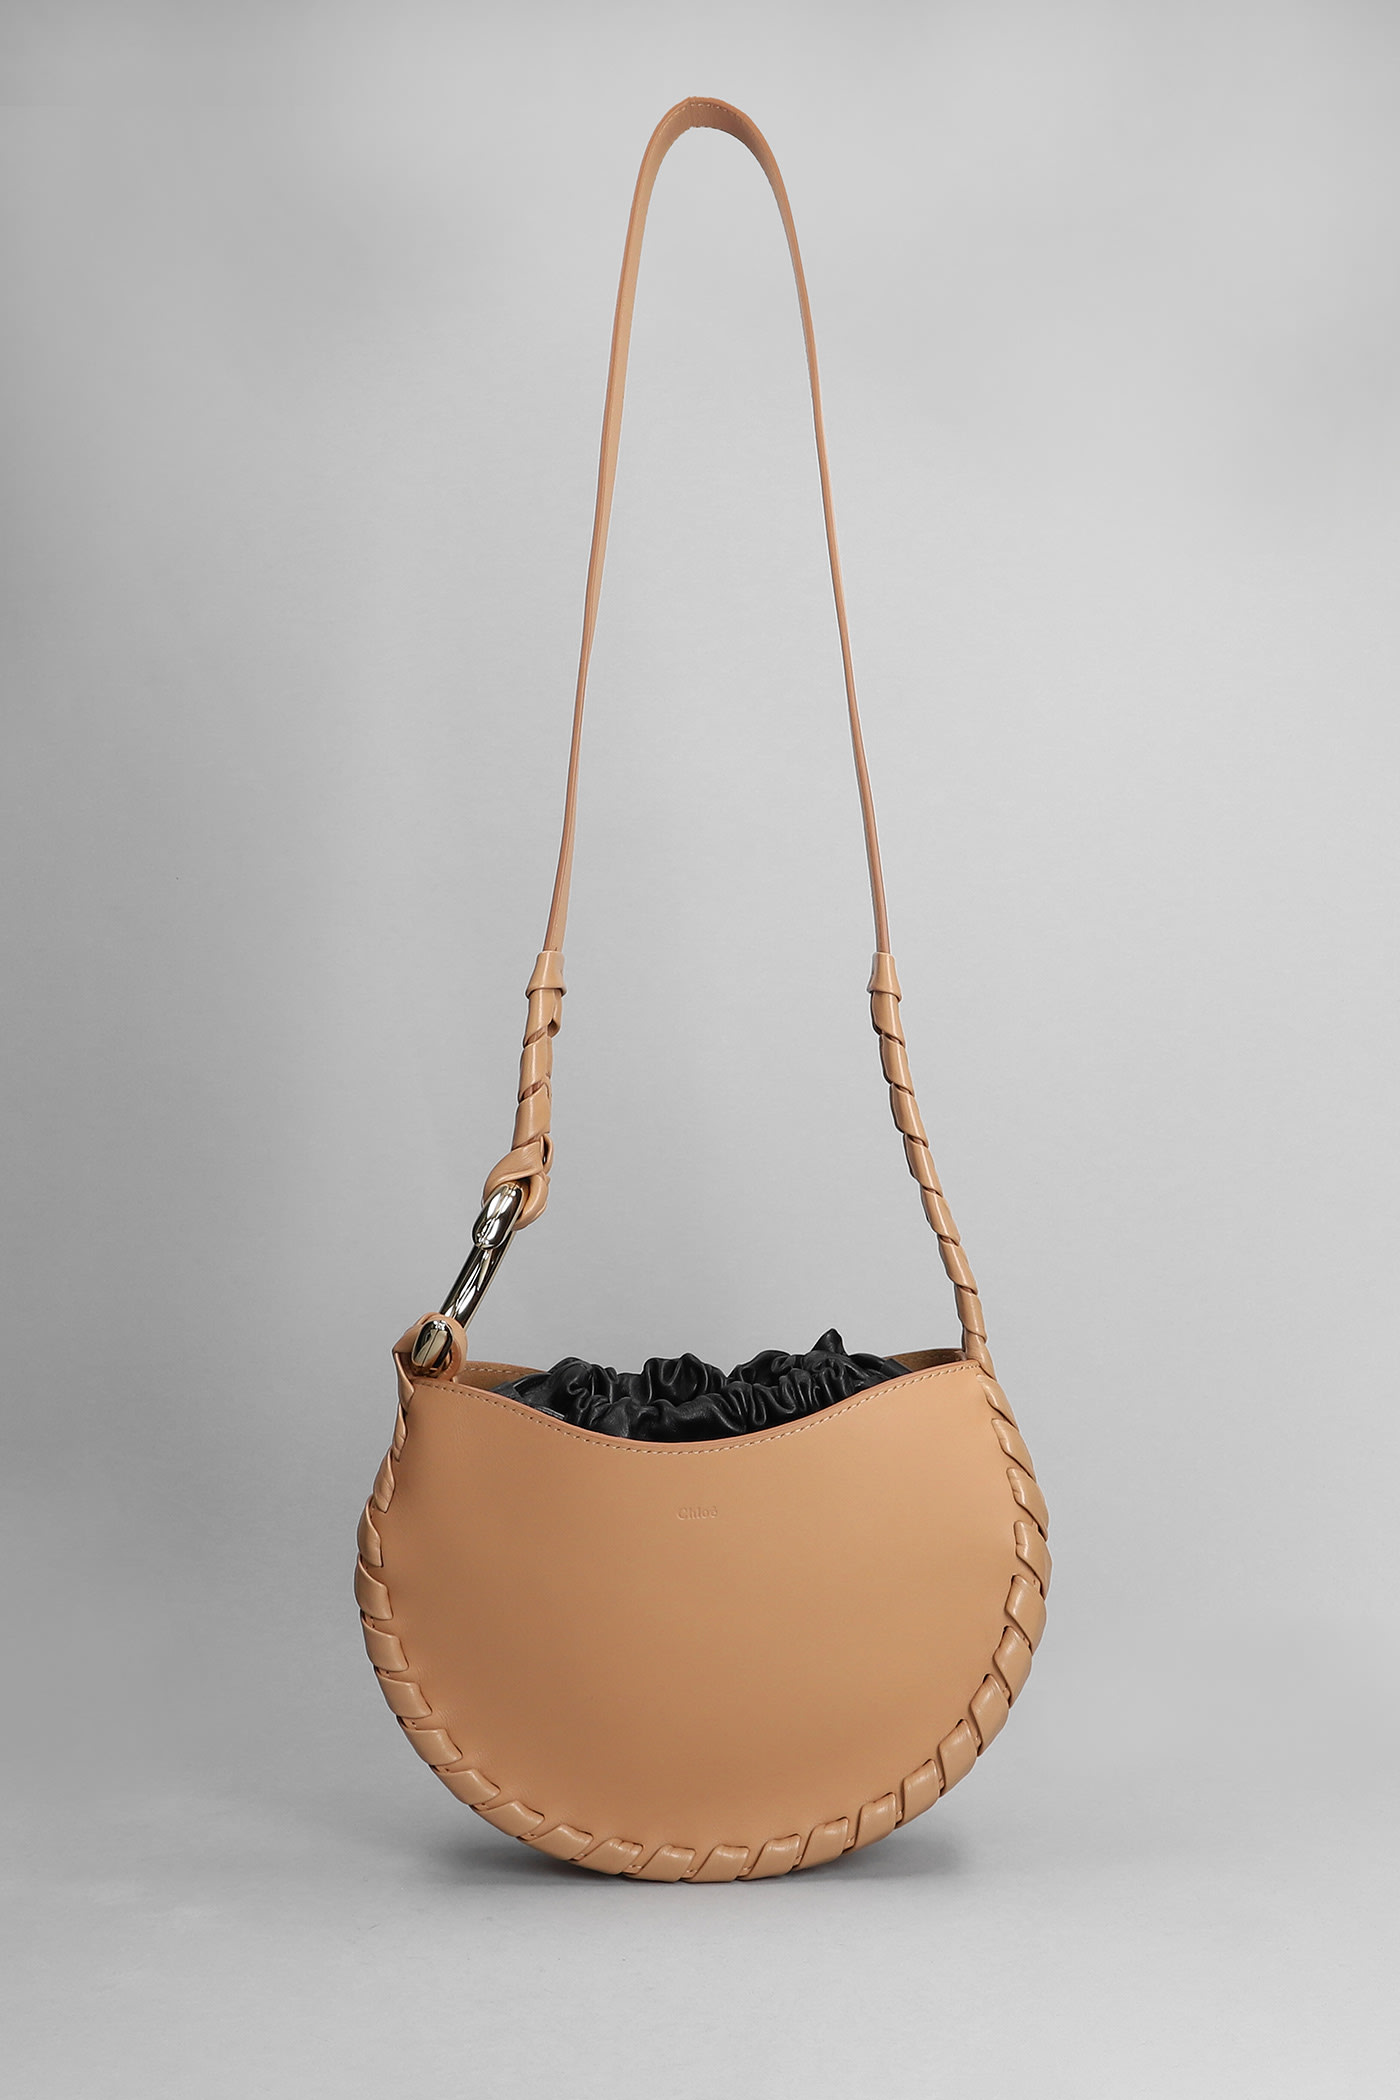 Chloé Mate Shoulder Bag In Leather Color Leather